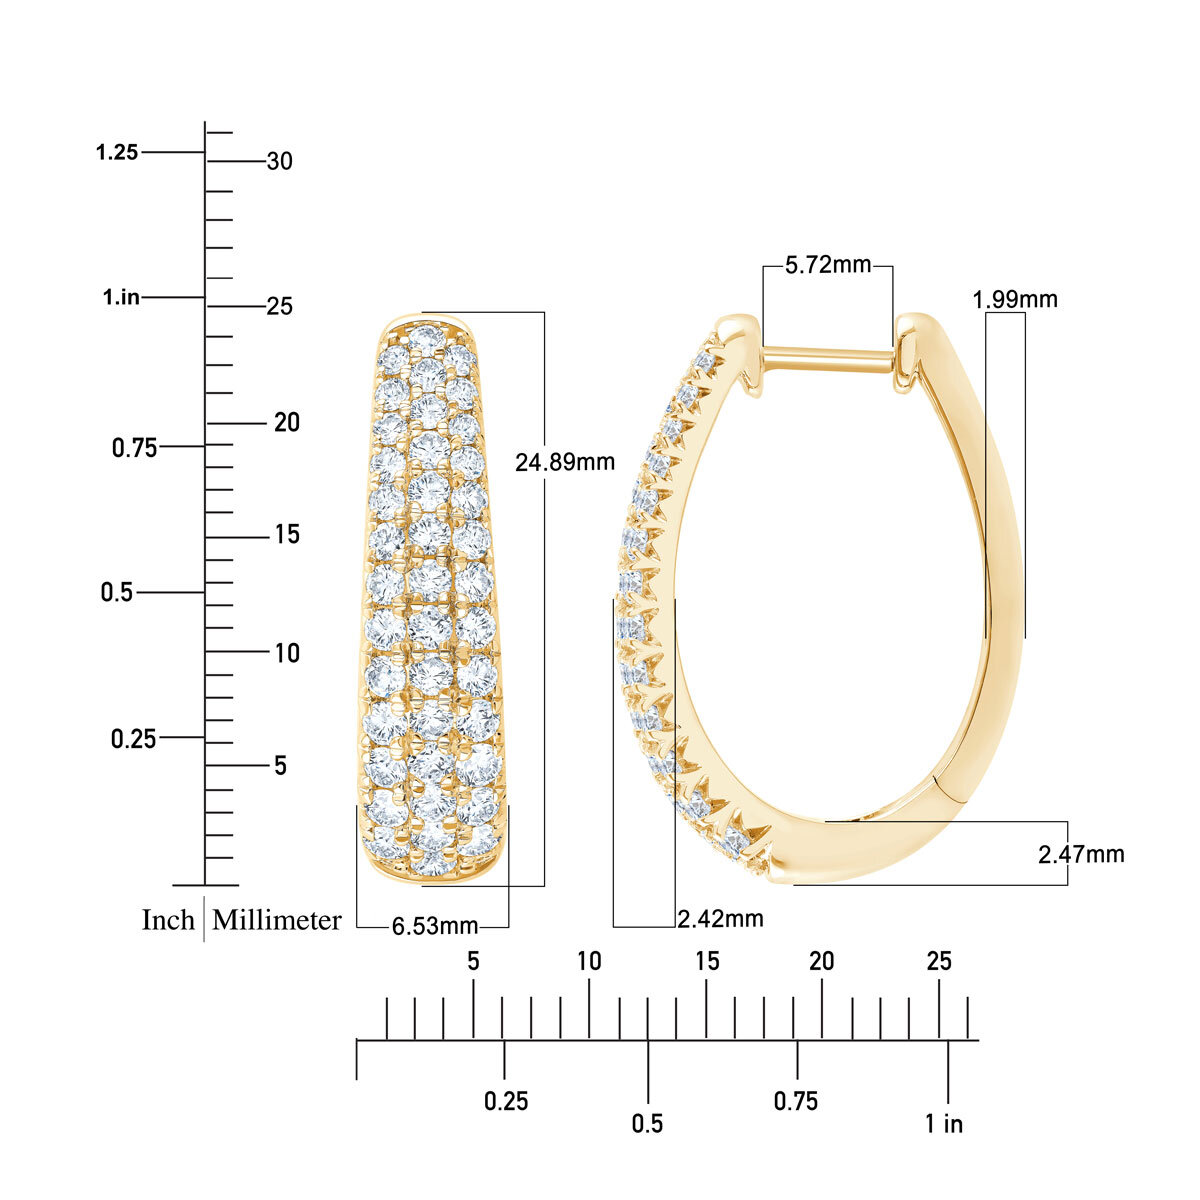 1.75ctw Diamond Hoop Earrings, 14K Yellow Gold